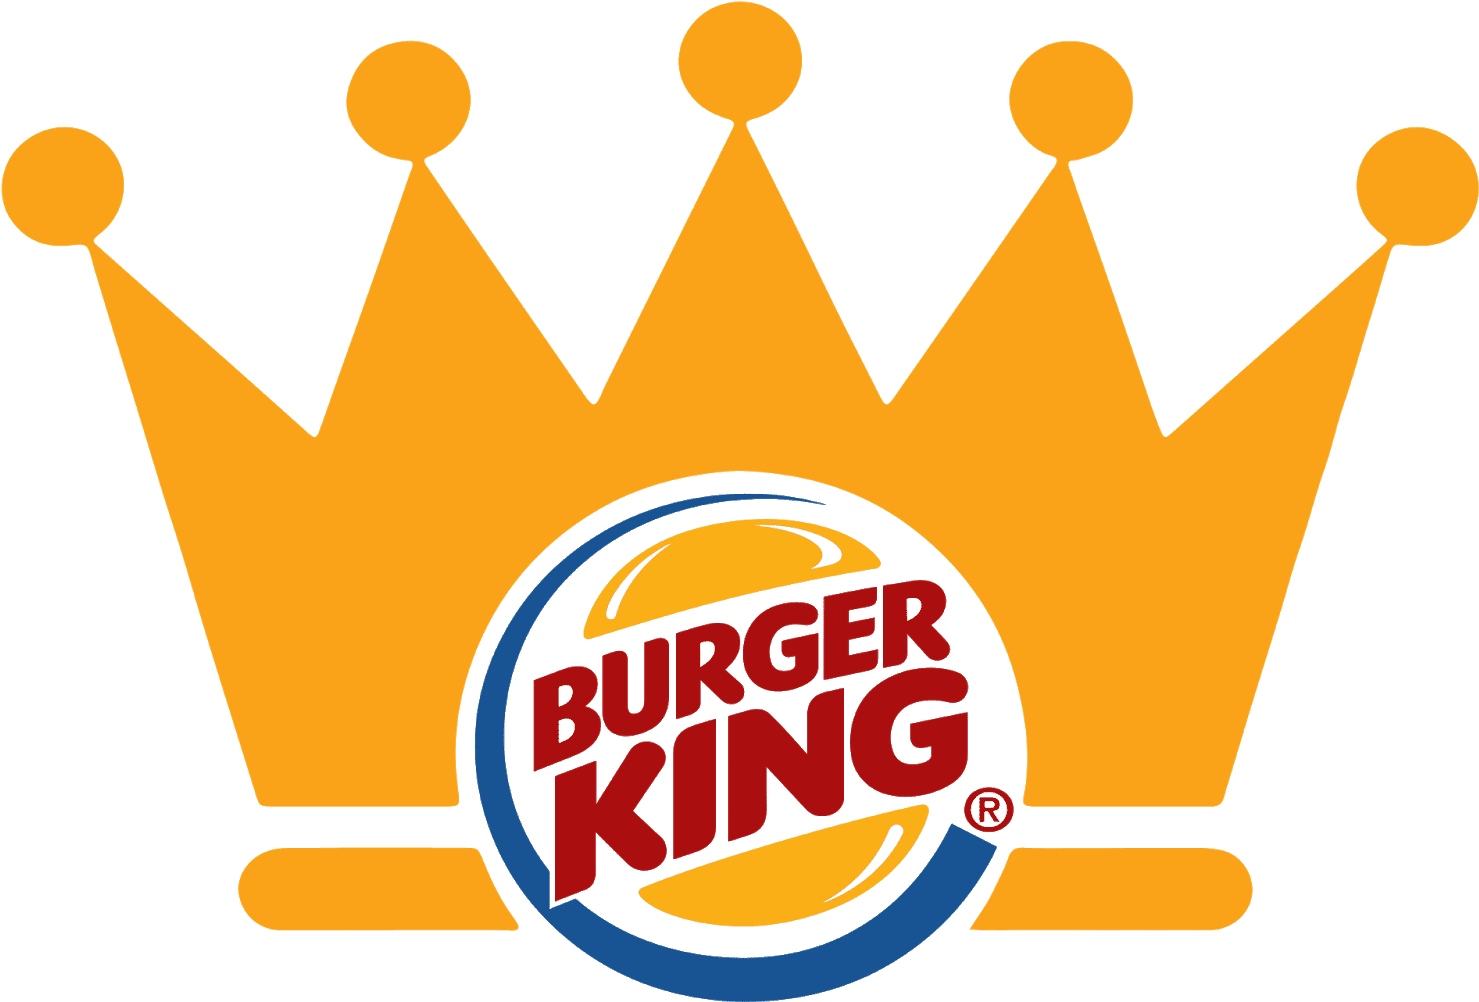 burger-king-logo-and-symbol-meaning-history-sign